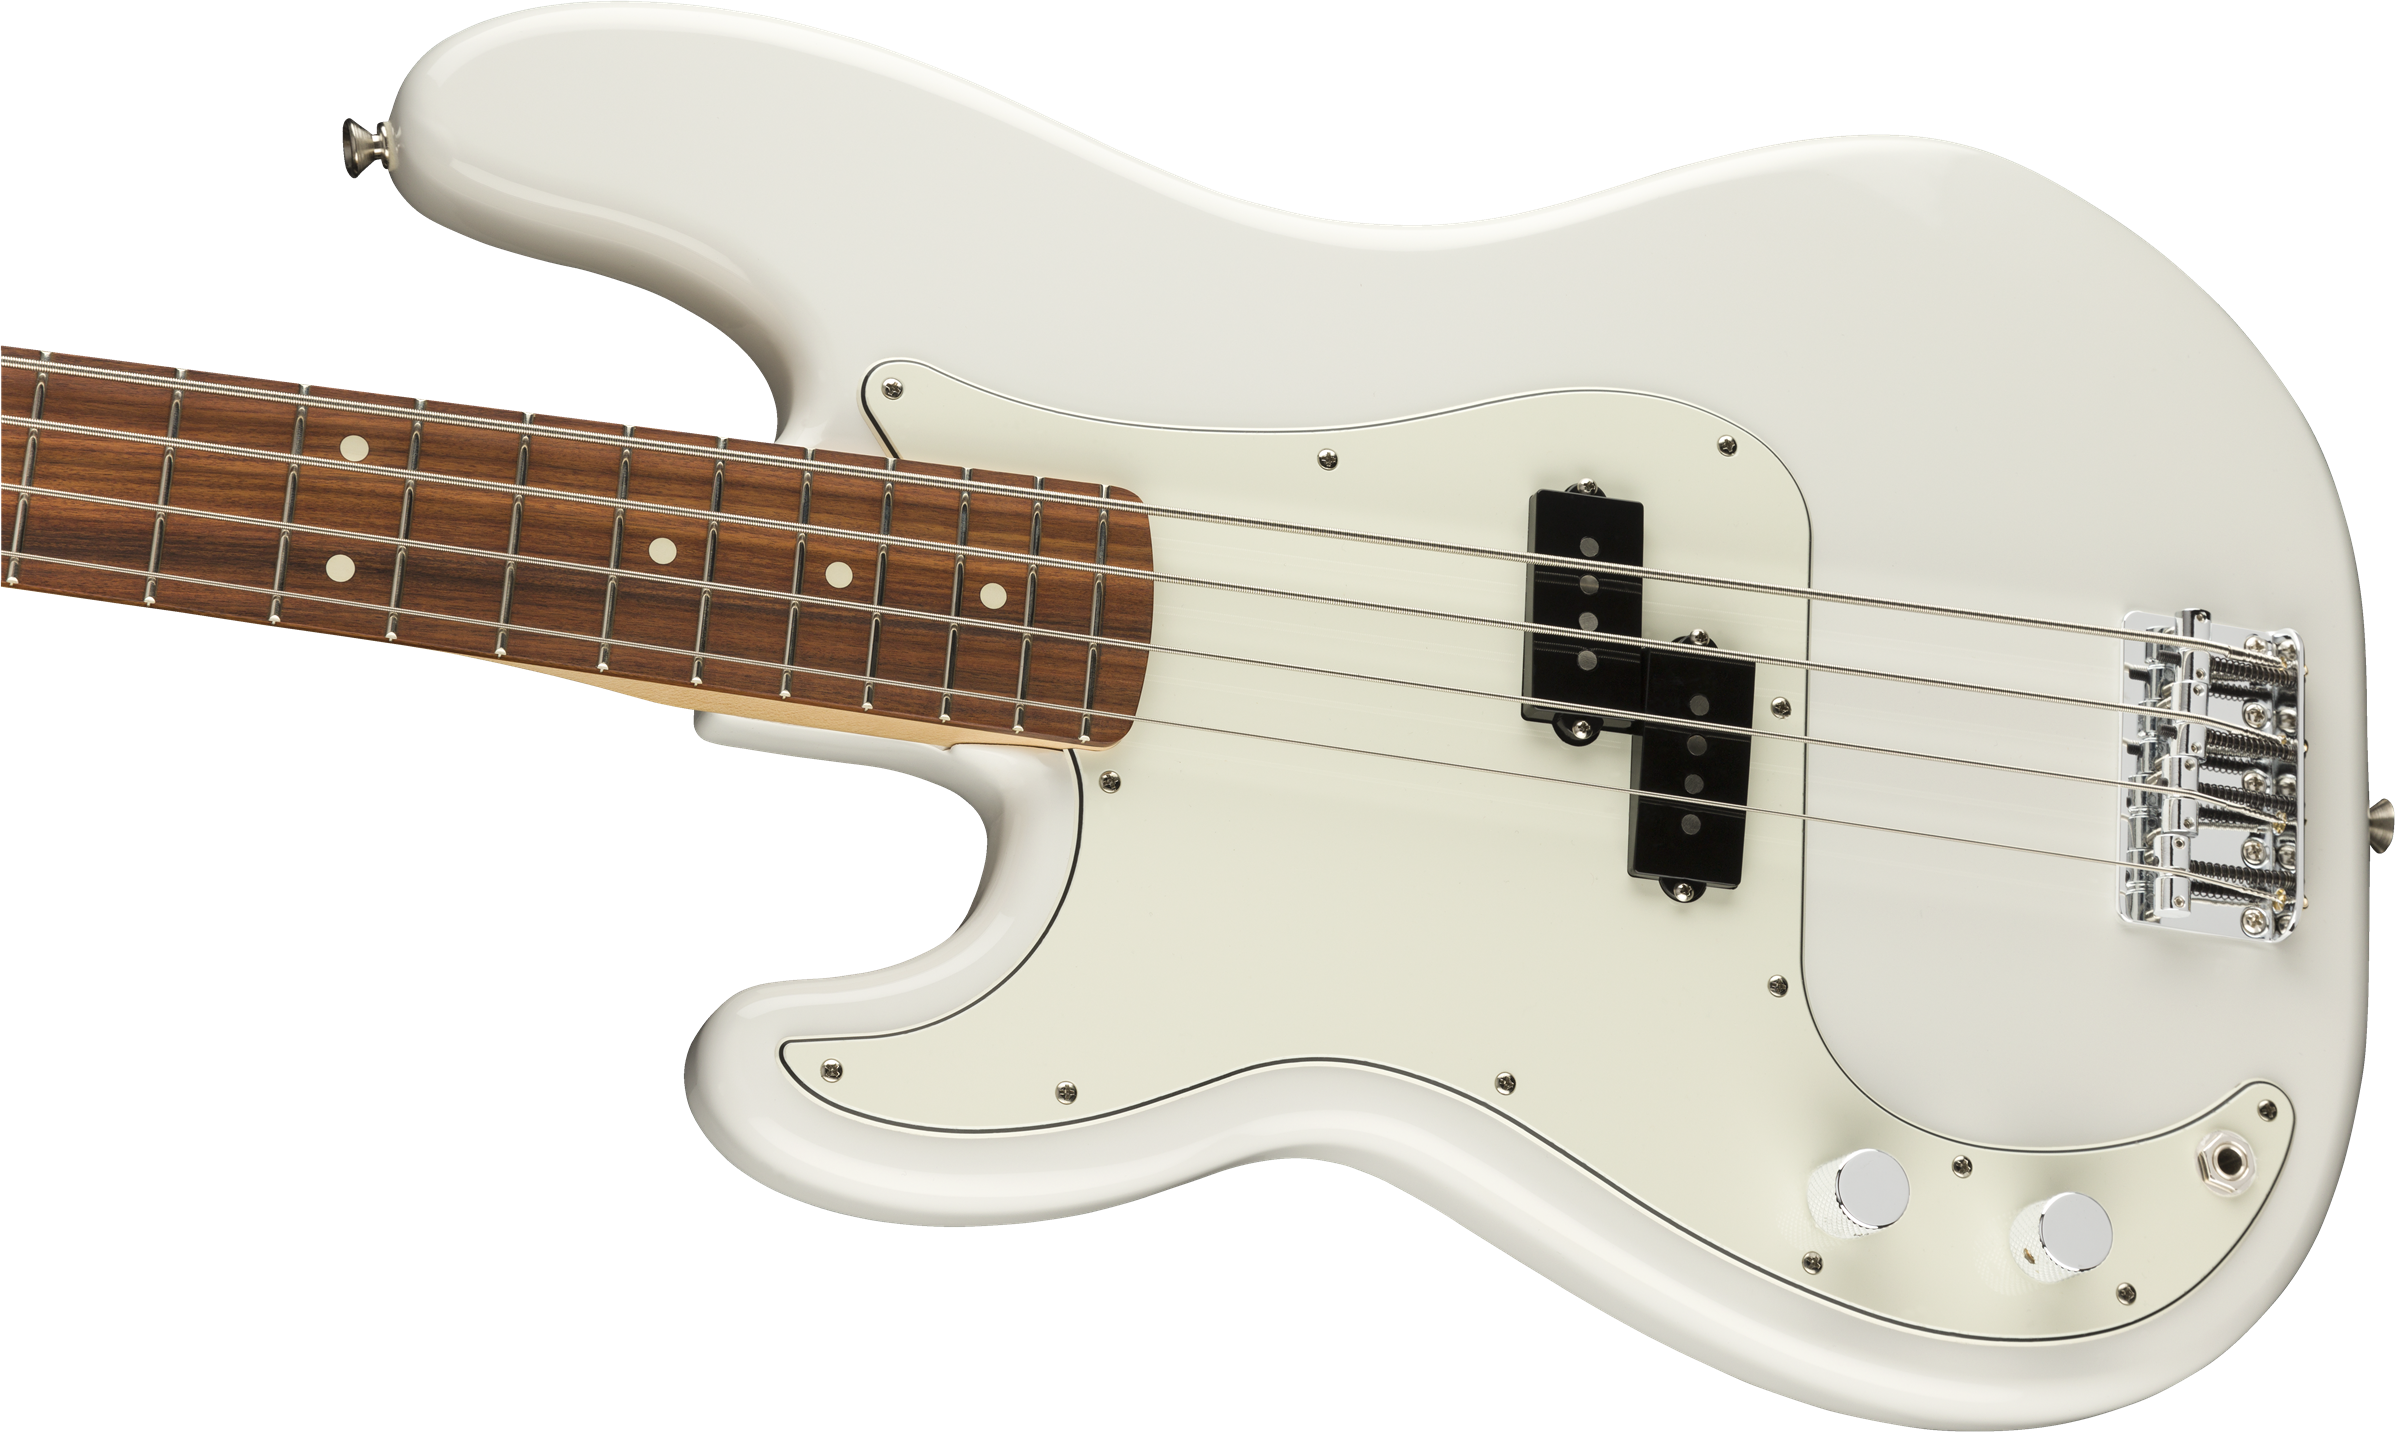 Player Precision Bass LH PF Polar White